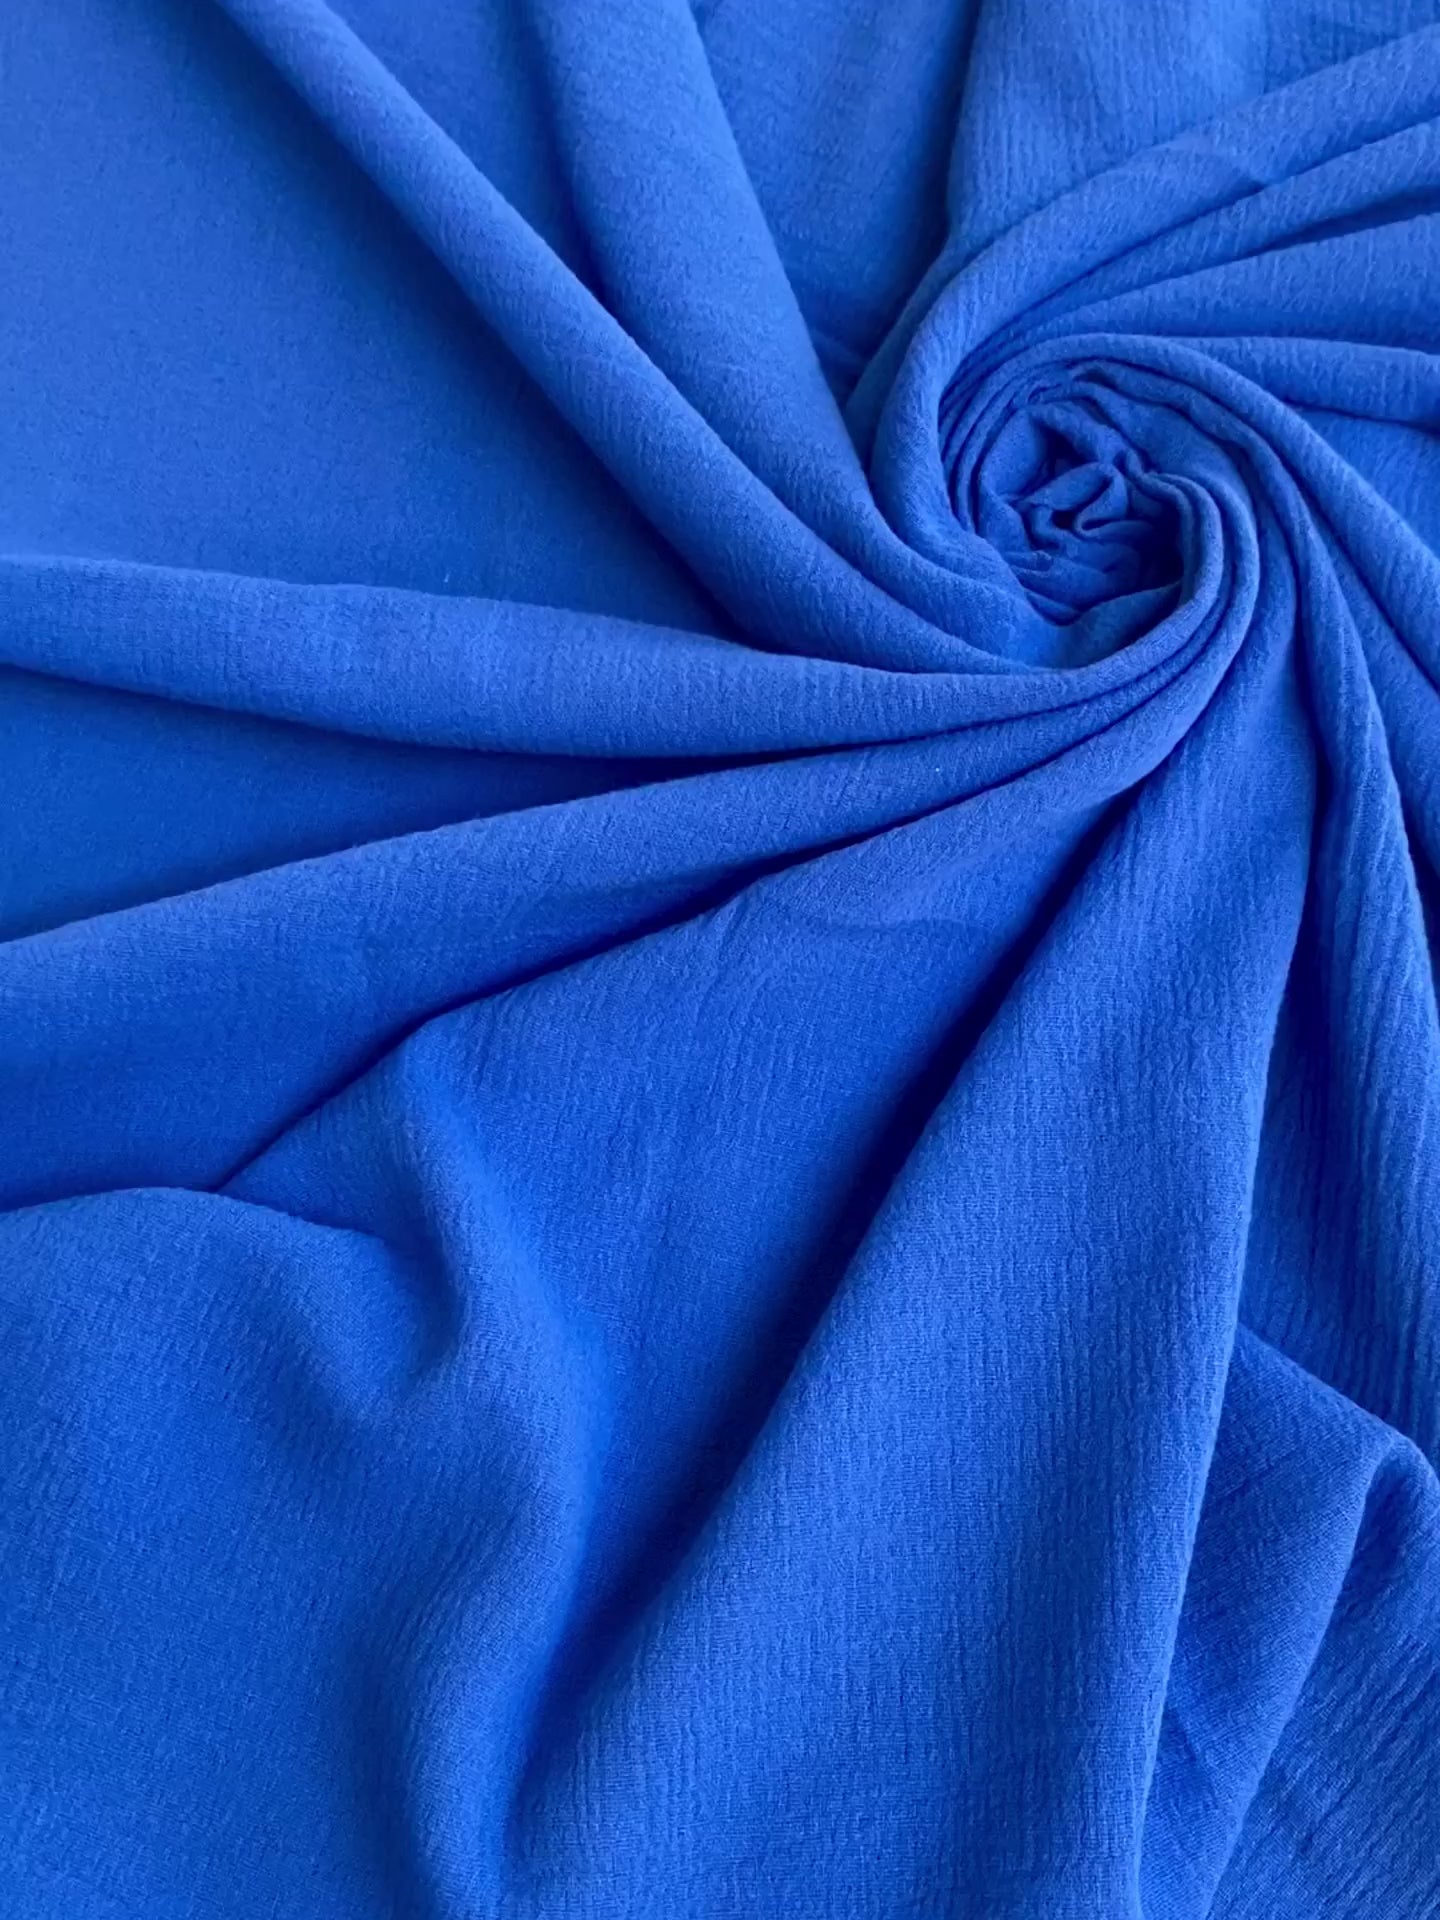 royal blue linen gauze, dark blue linen gauze, blue linen gauze, linen gauze for woman, linen gauze for bride, linen gauze in low price, premium linen gauze